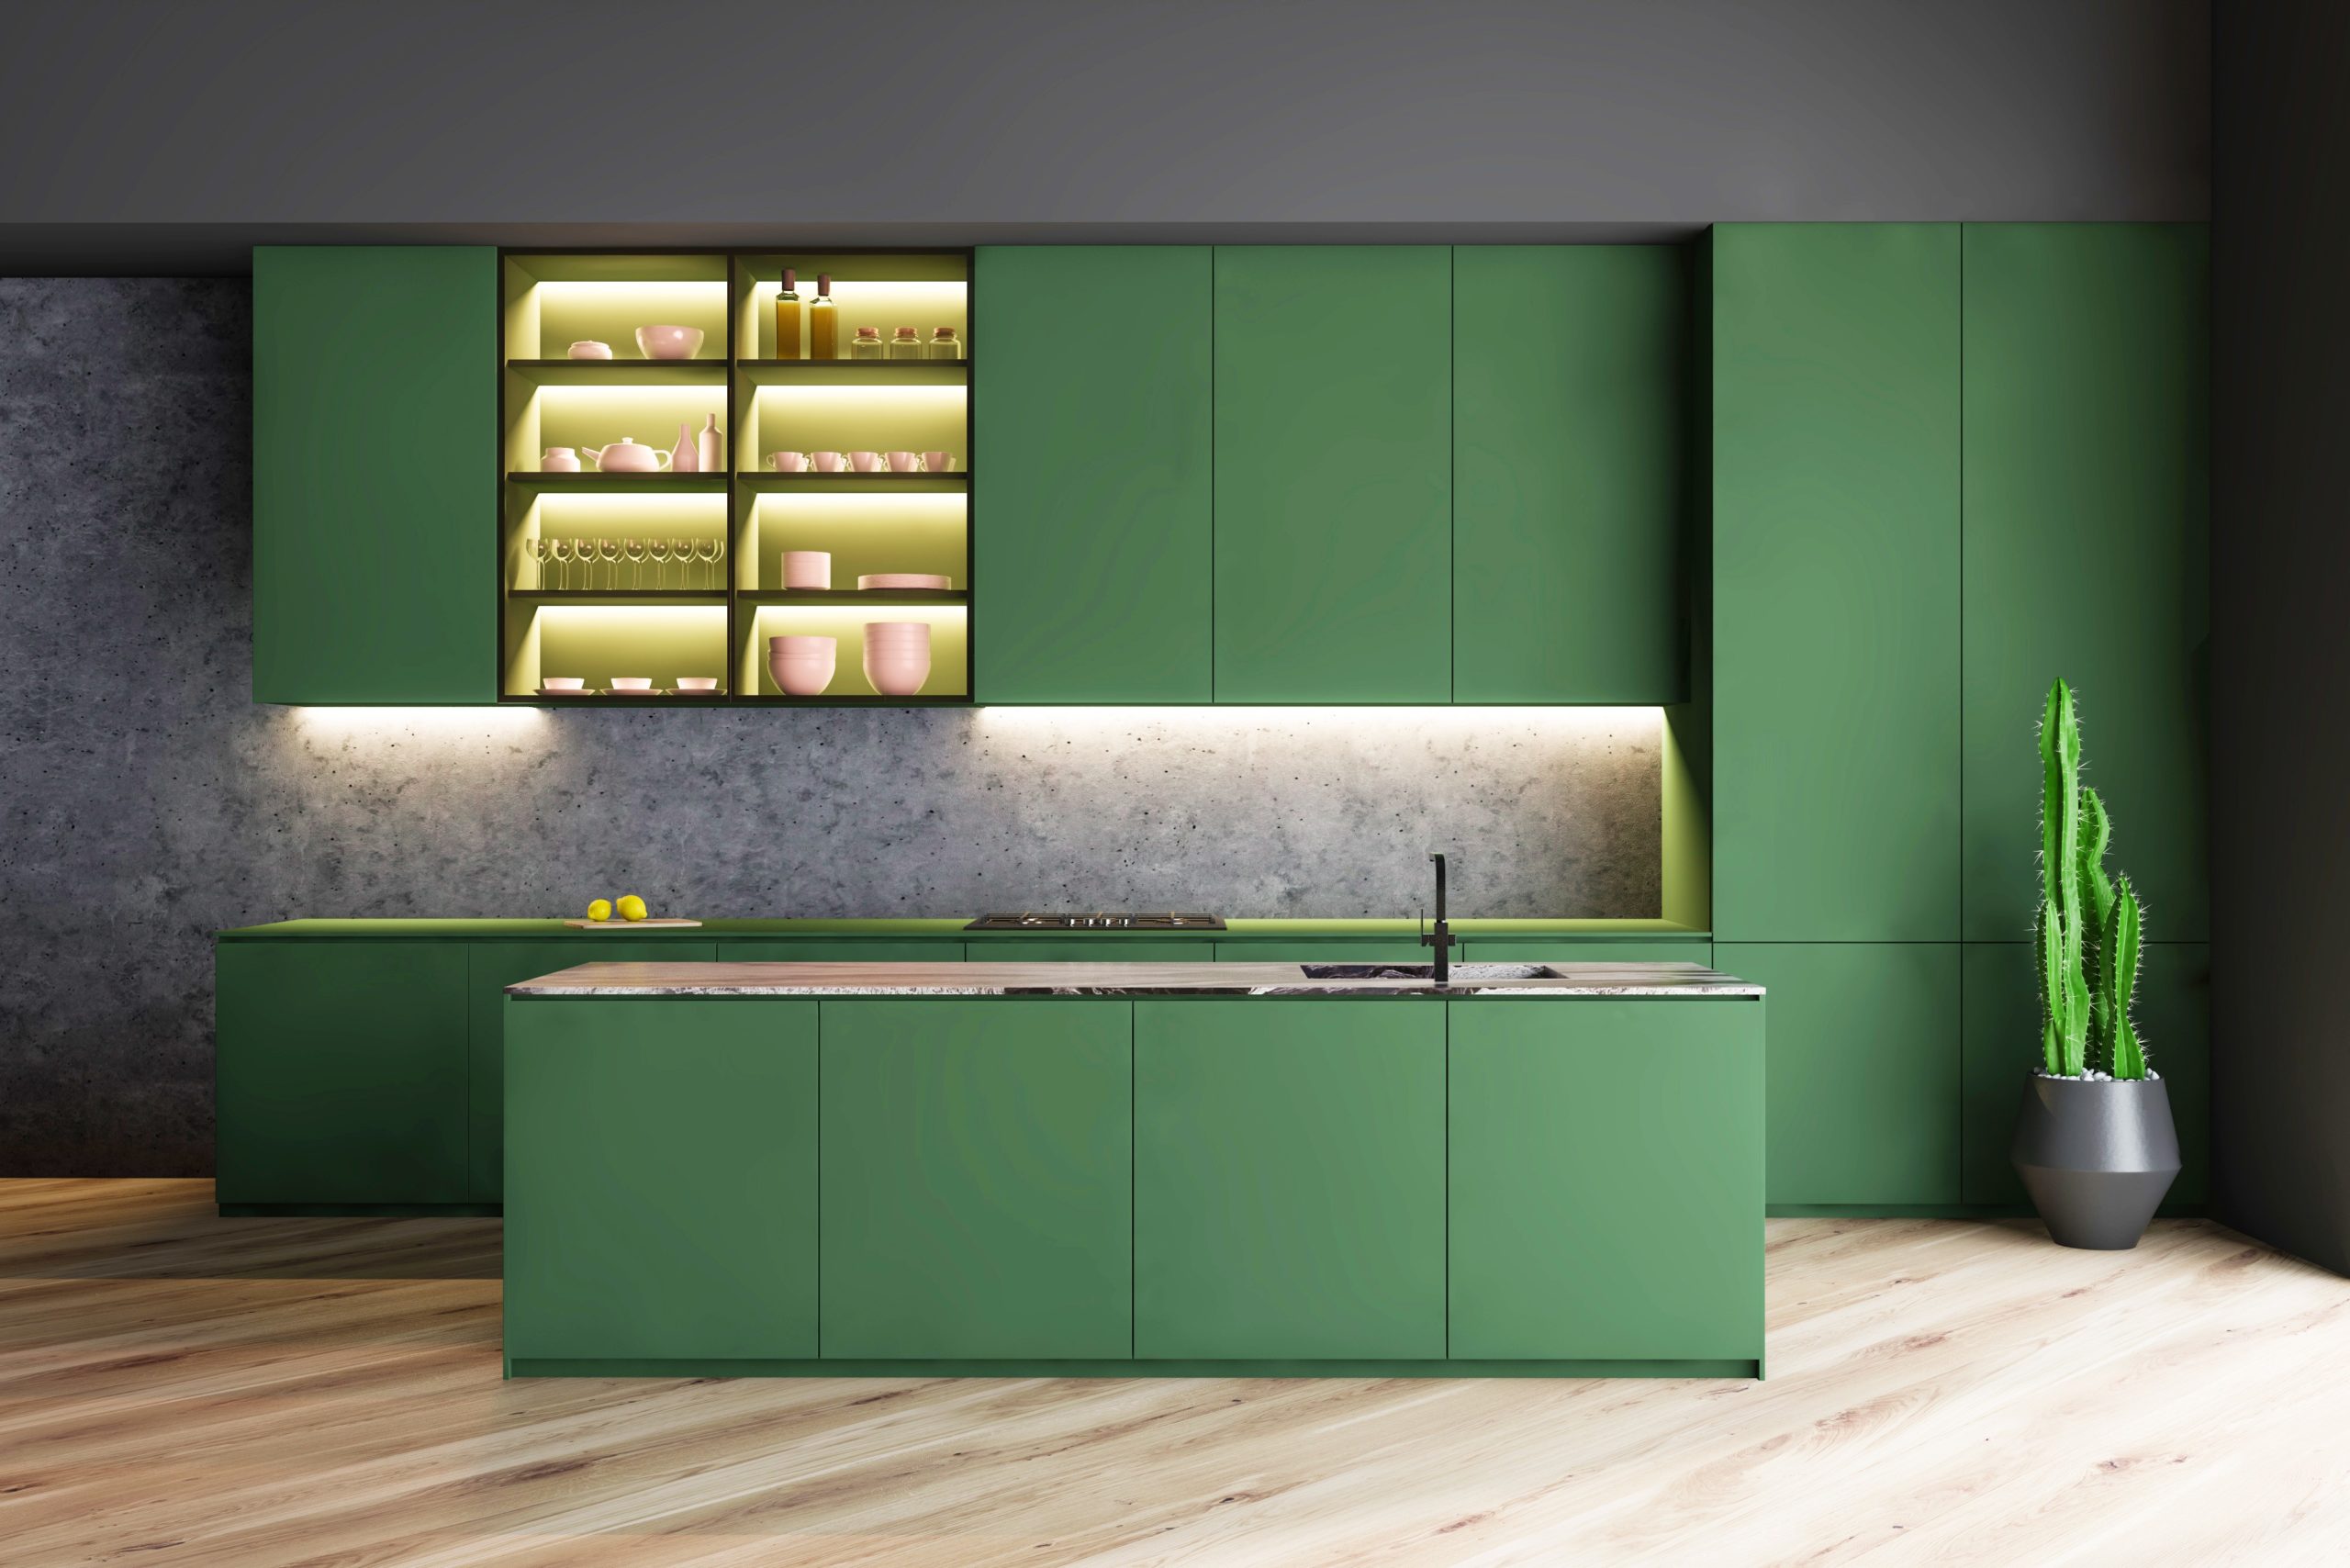 <img src="green.jpg" alt="green kitchen island with ambient lighting"/> 